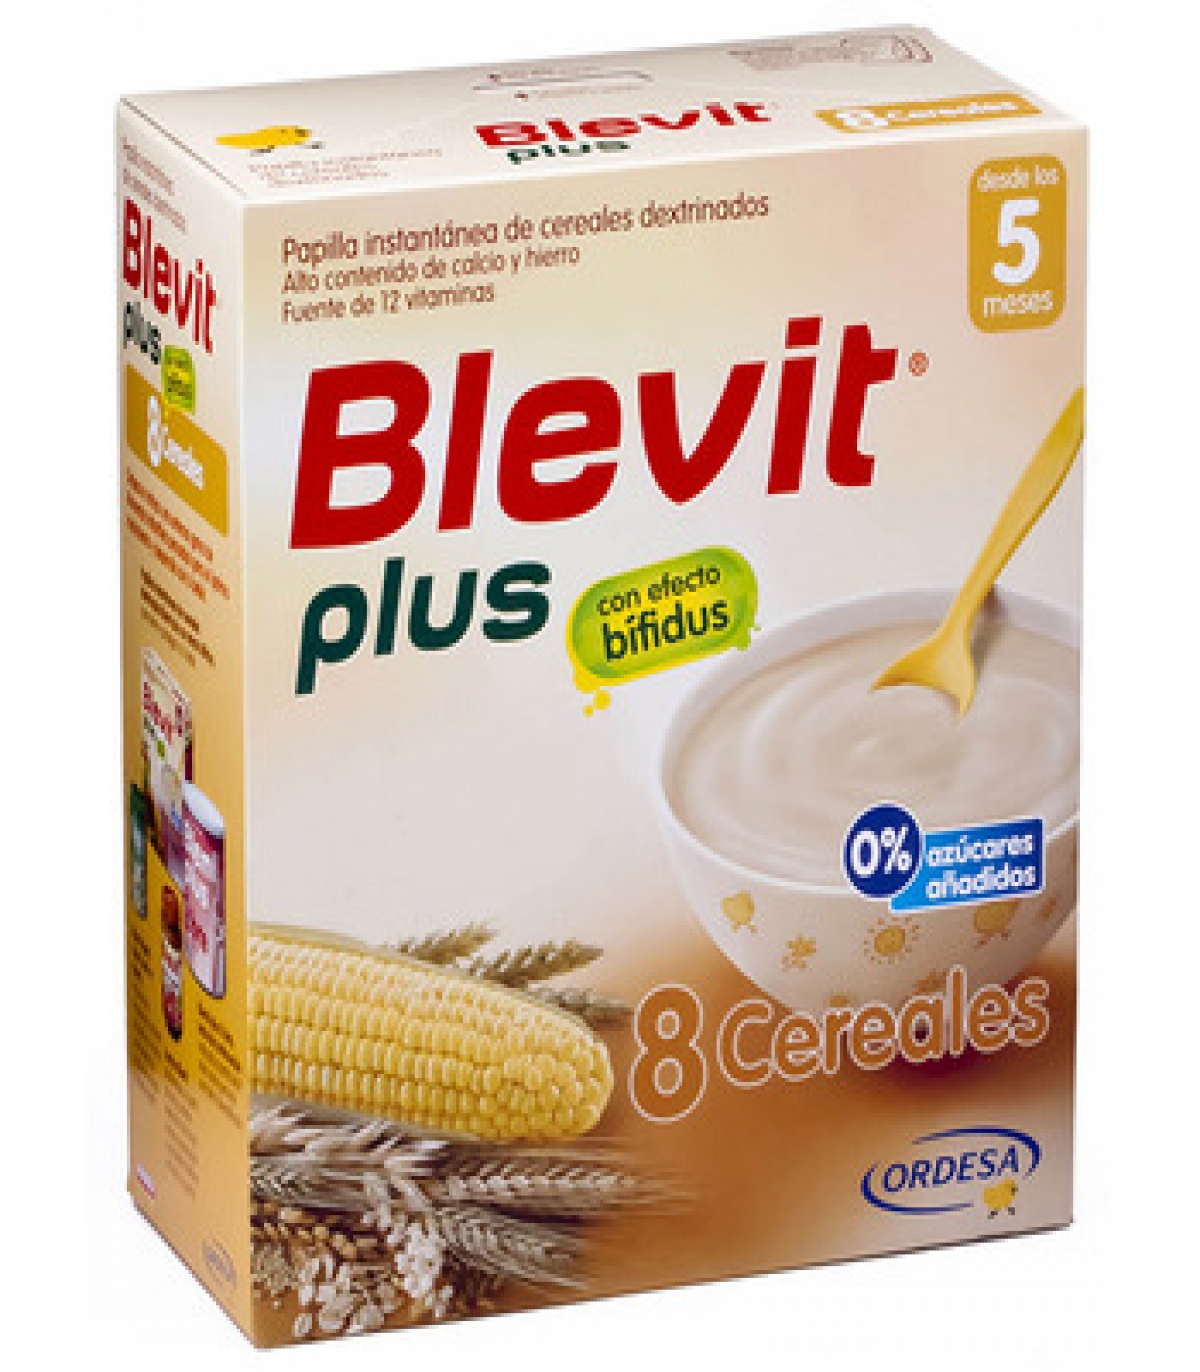 Blevit Plus 8 Cereales Superfibra